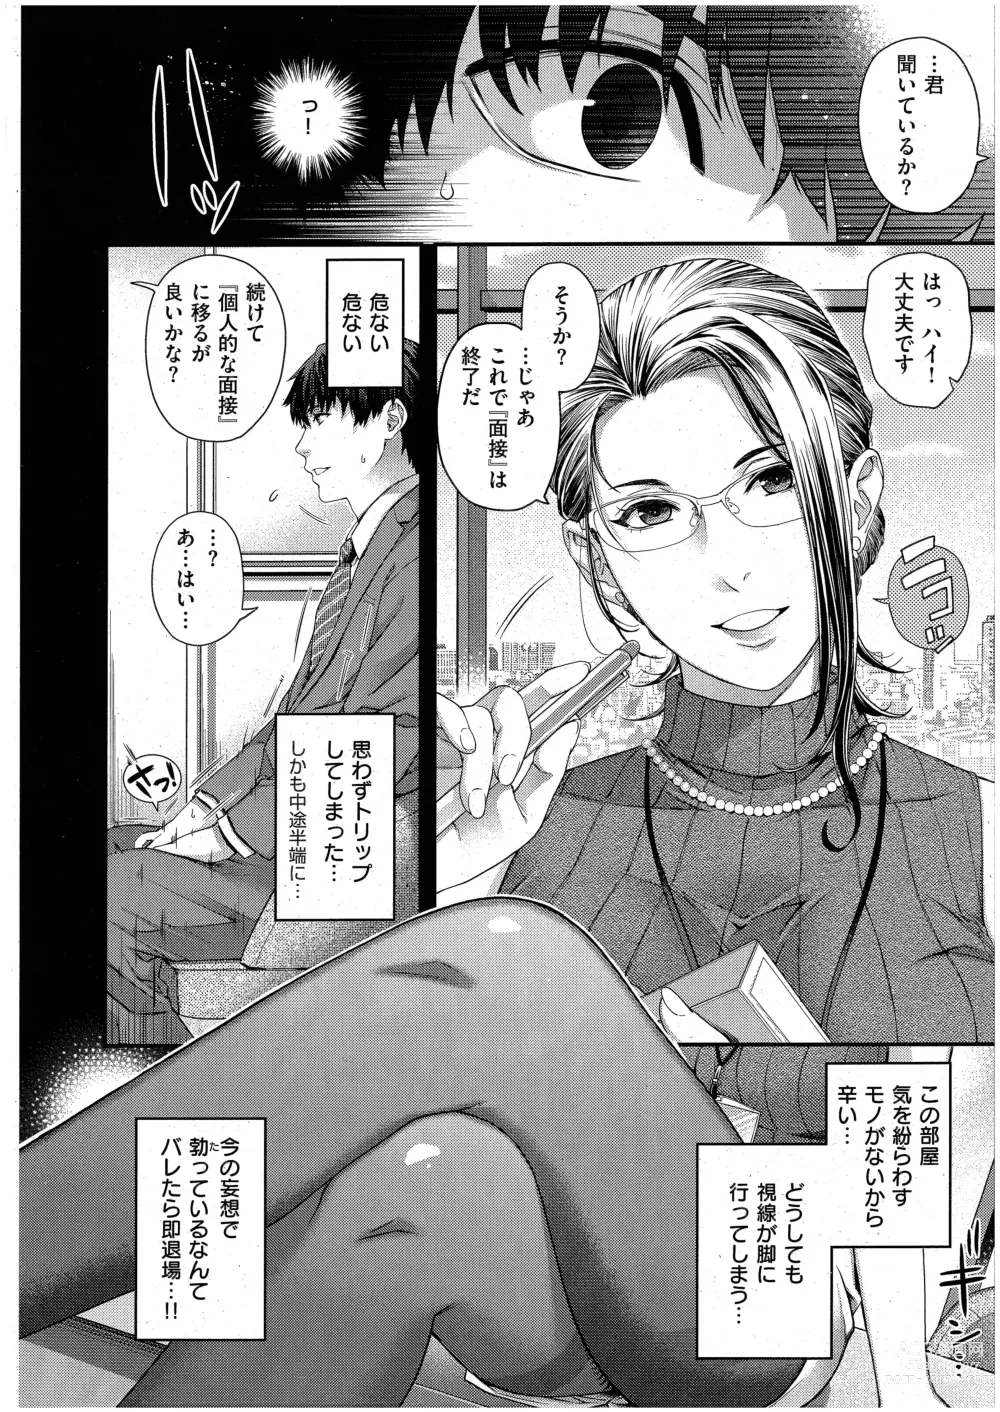 Page 9 of manga Senjou no Kemono